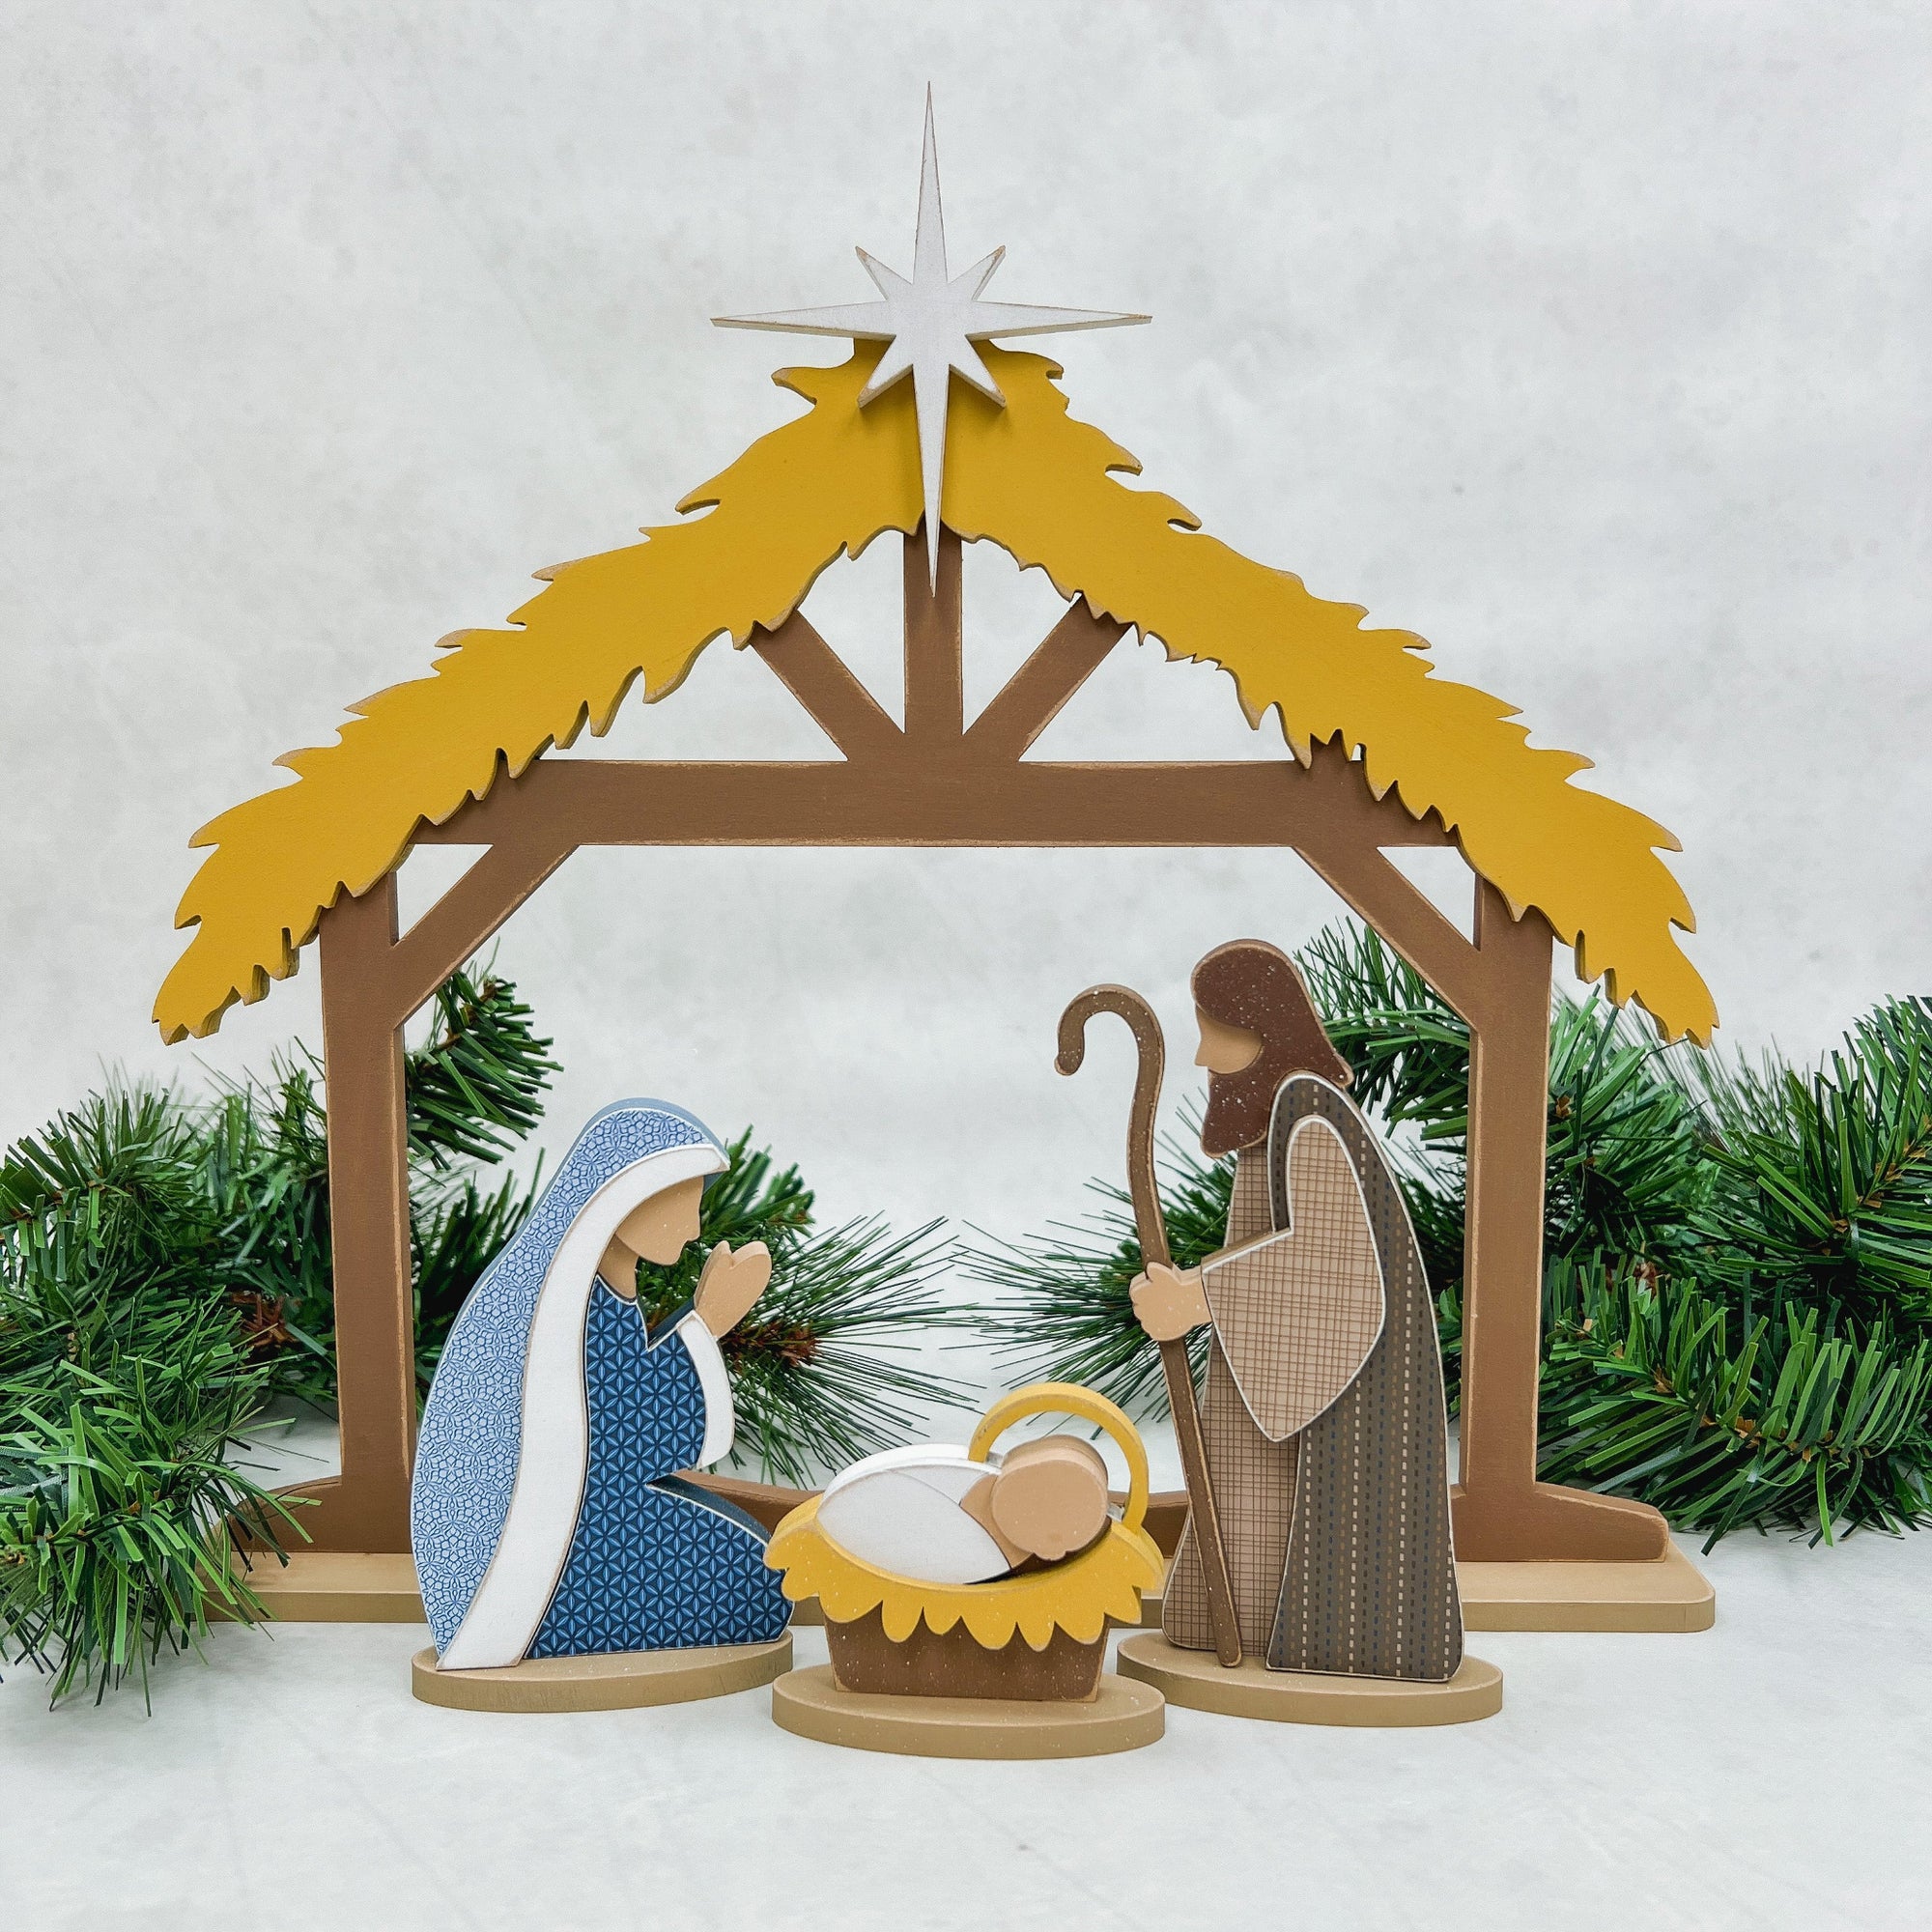 Nativity wood set with manger, Mary, Joseph, and baby Jesus